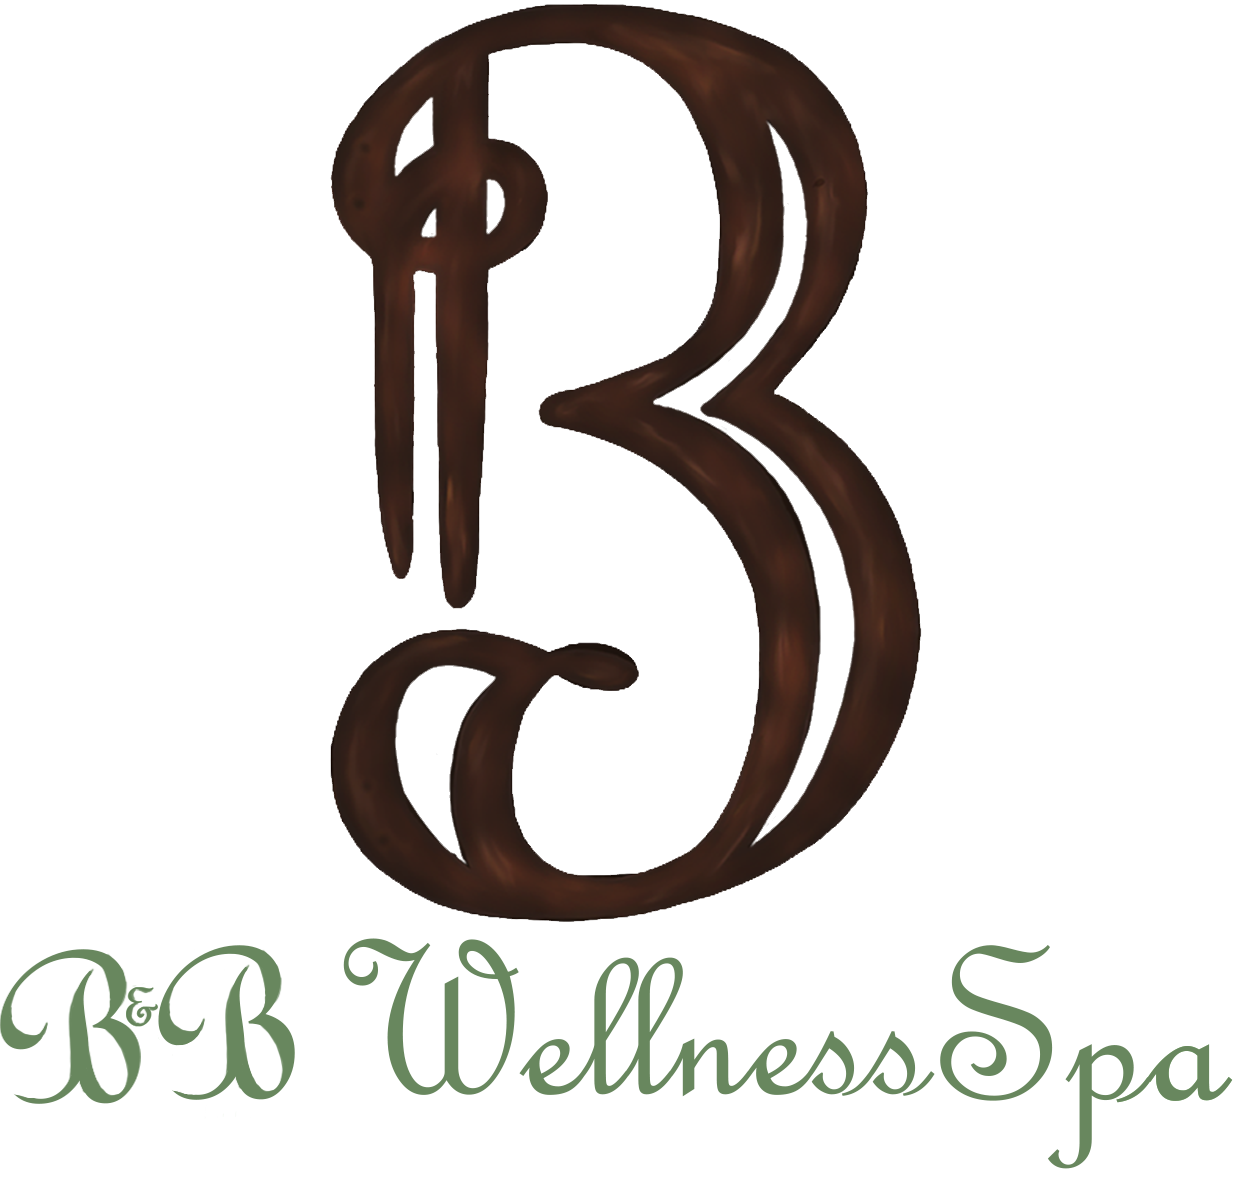 Breast & Body Wellness Spa